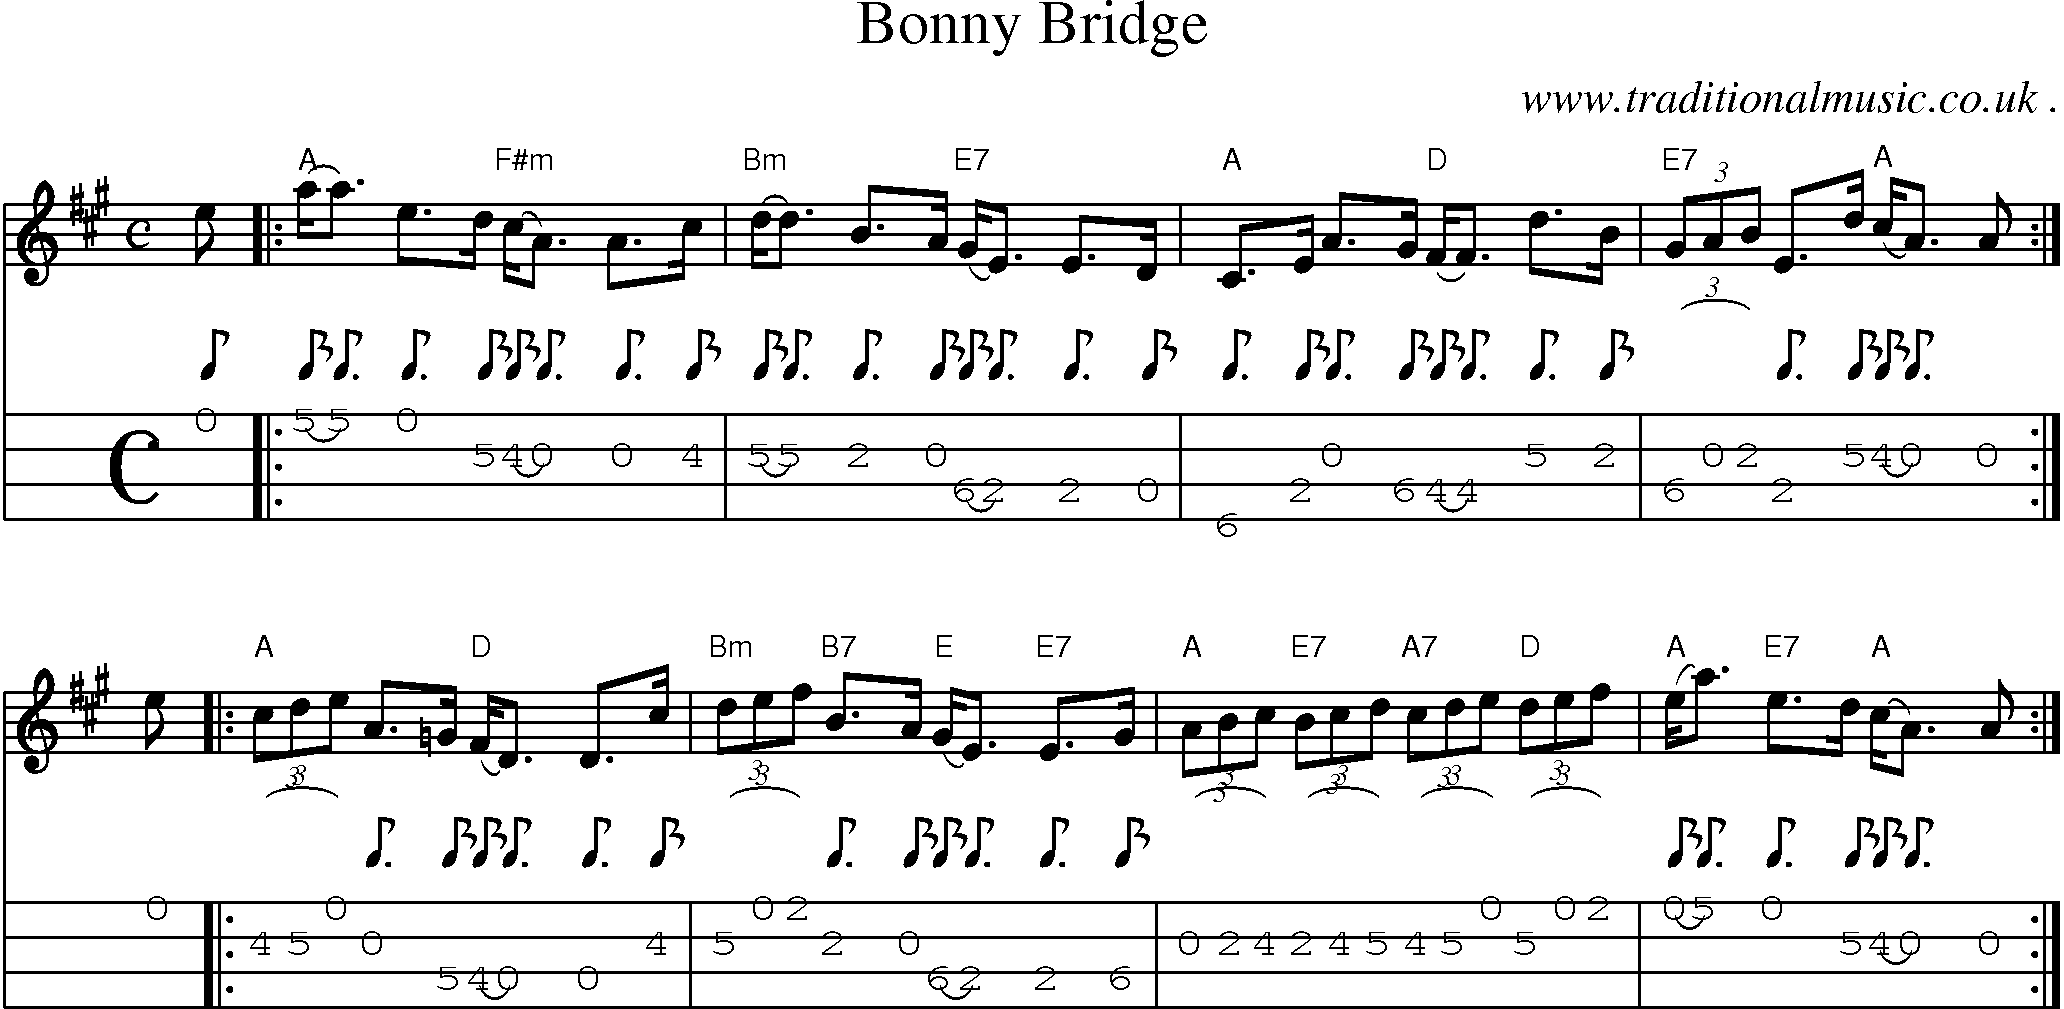 Sheet-music  score, Chords and Mandolin Tabs for Bonny Bridge